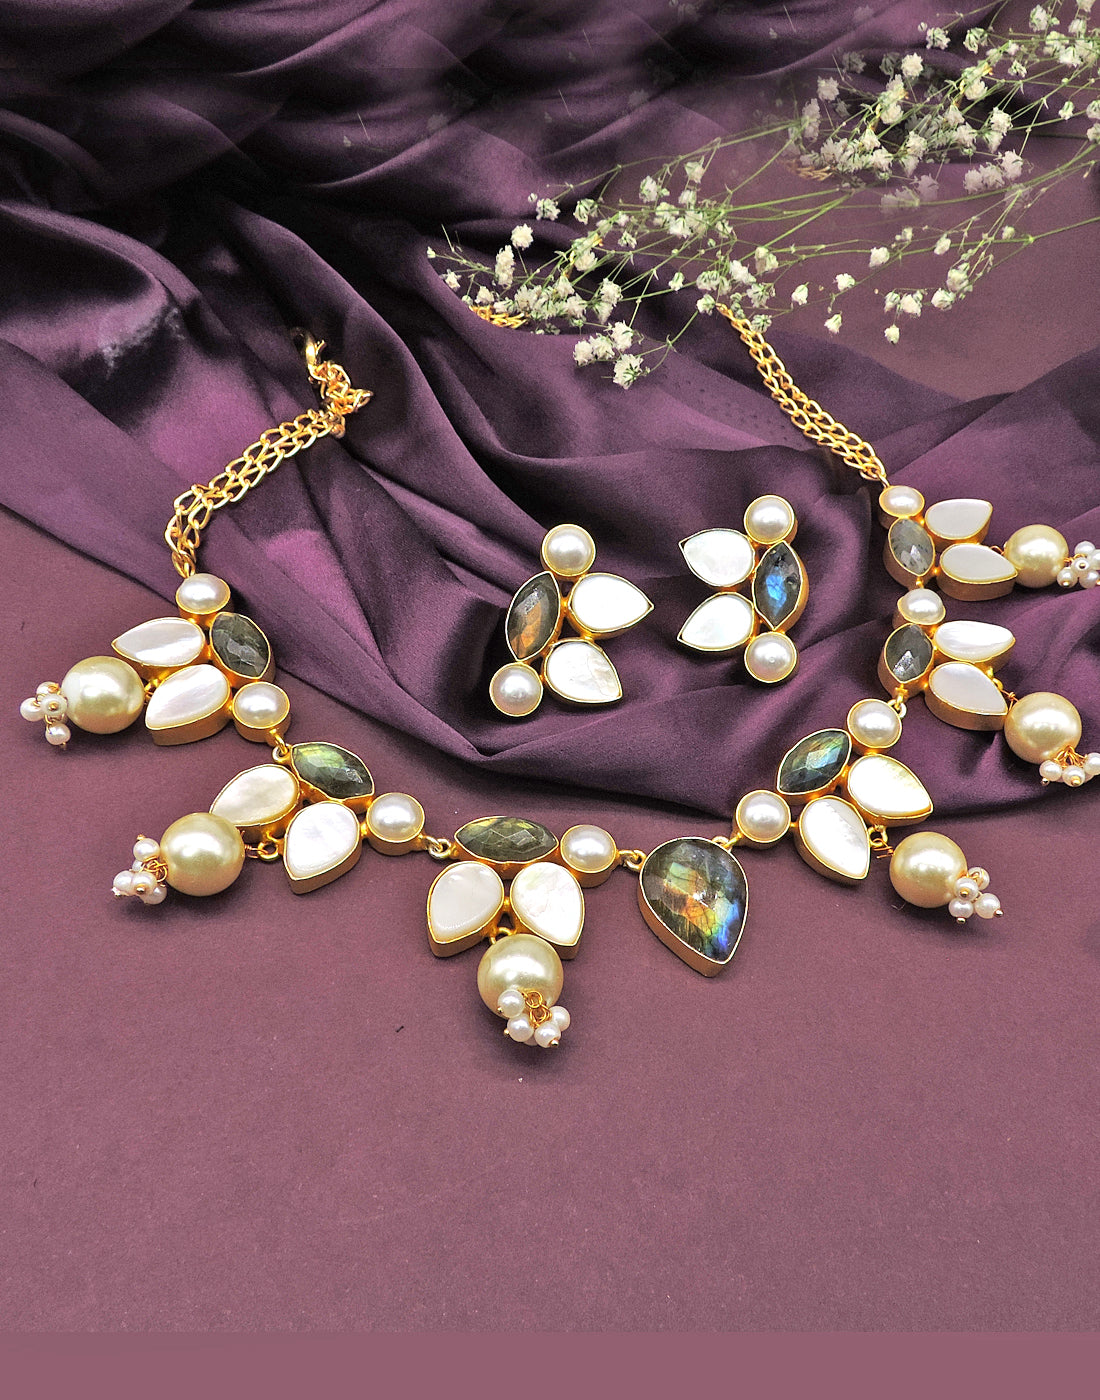 Butterfly Side Earrings - Statement Earrings - Gold-Plated & Hypoallergenic Jewellery - Made in India - Dubai Jewellery - Dori